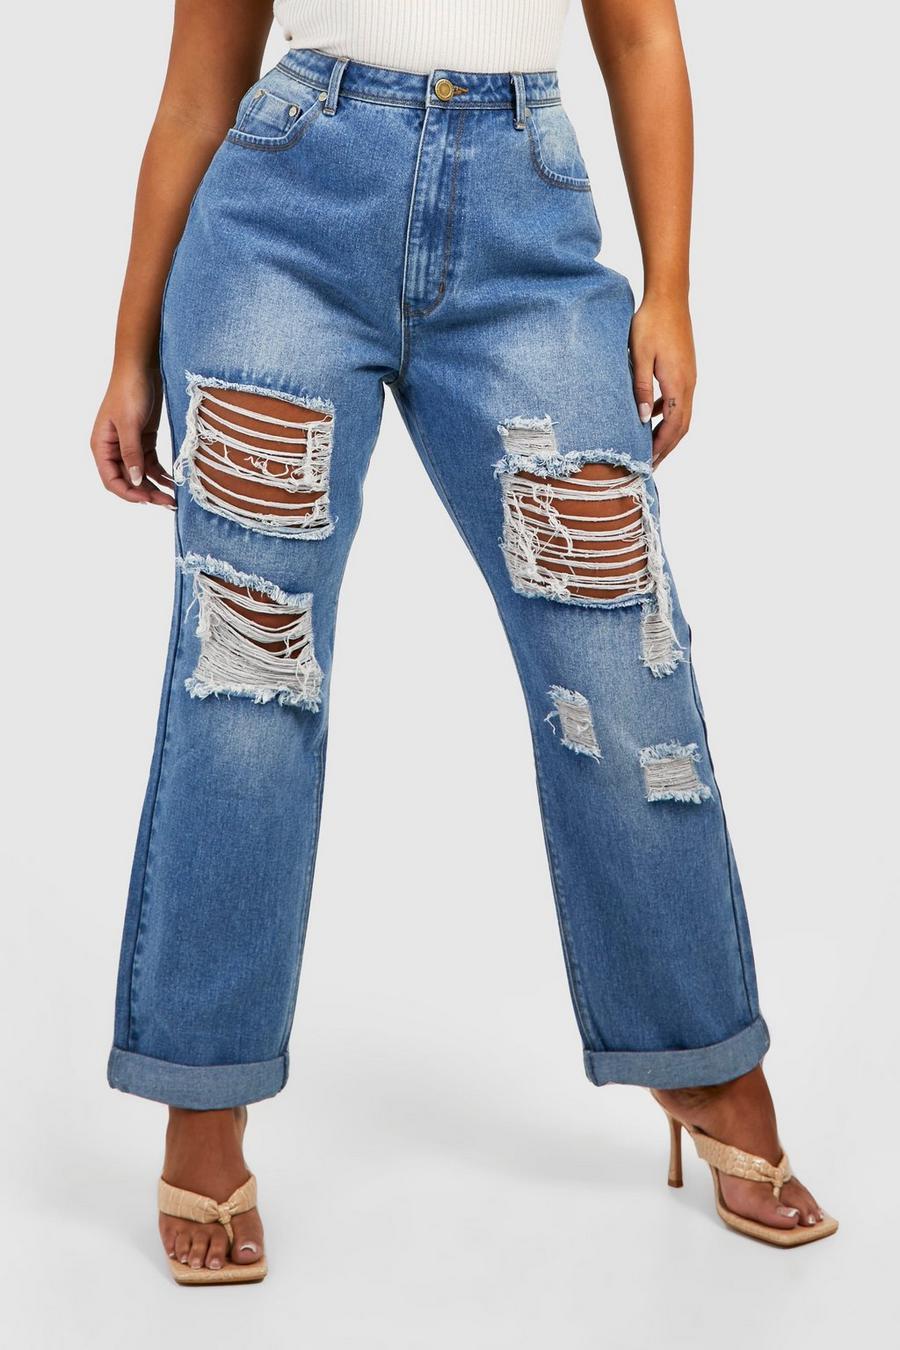 spodnie mom jeans ripped dziury